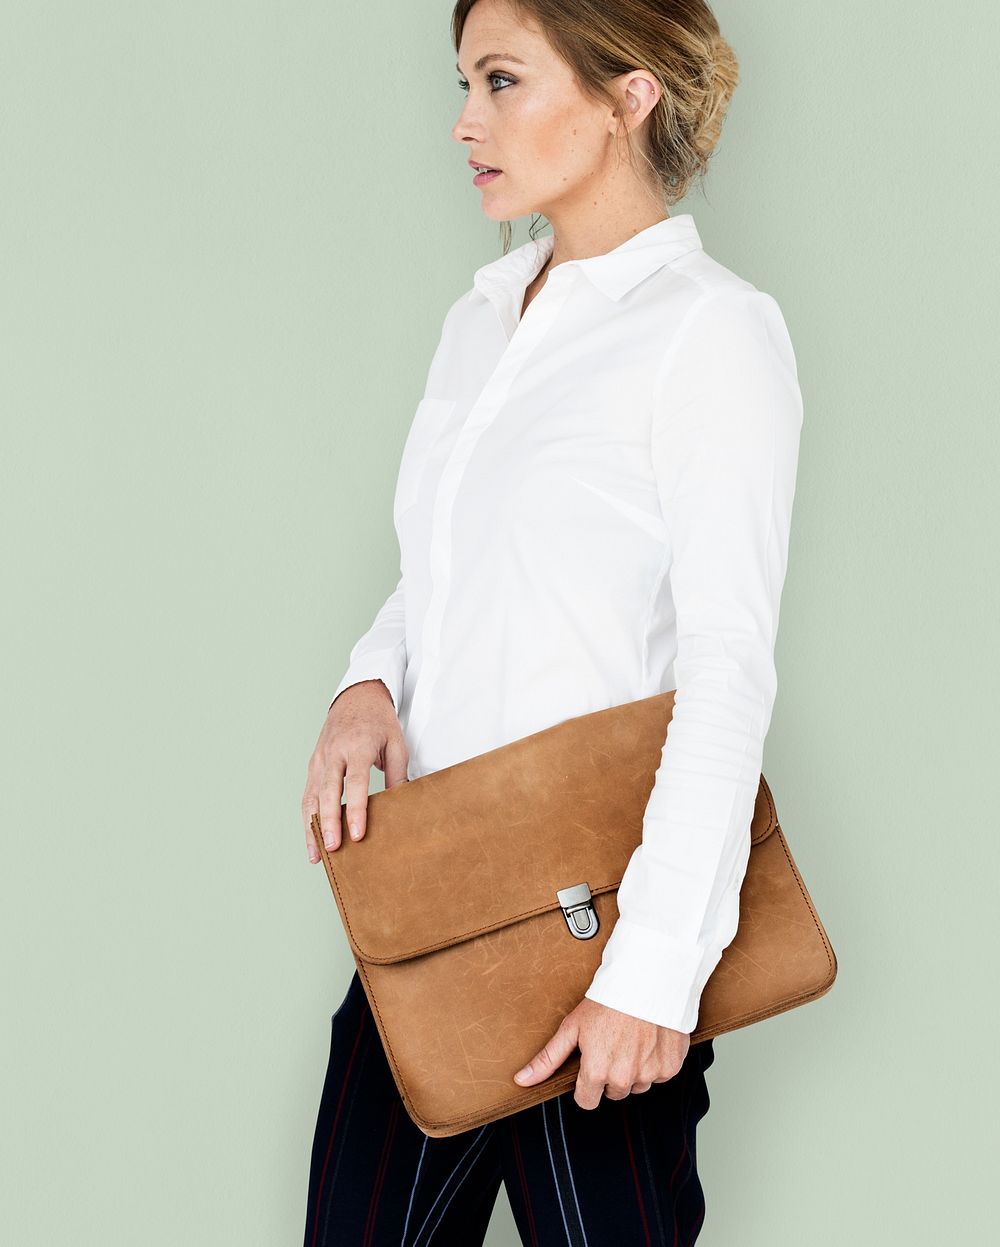 Caucasian Business Woman Holding Bag